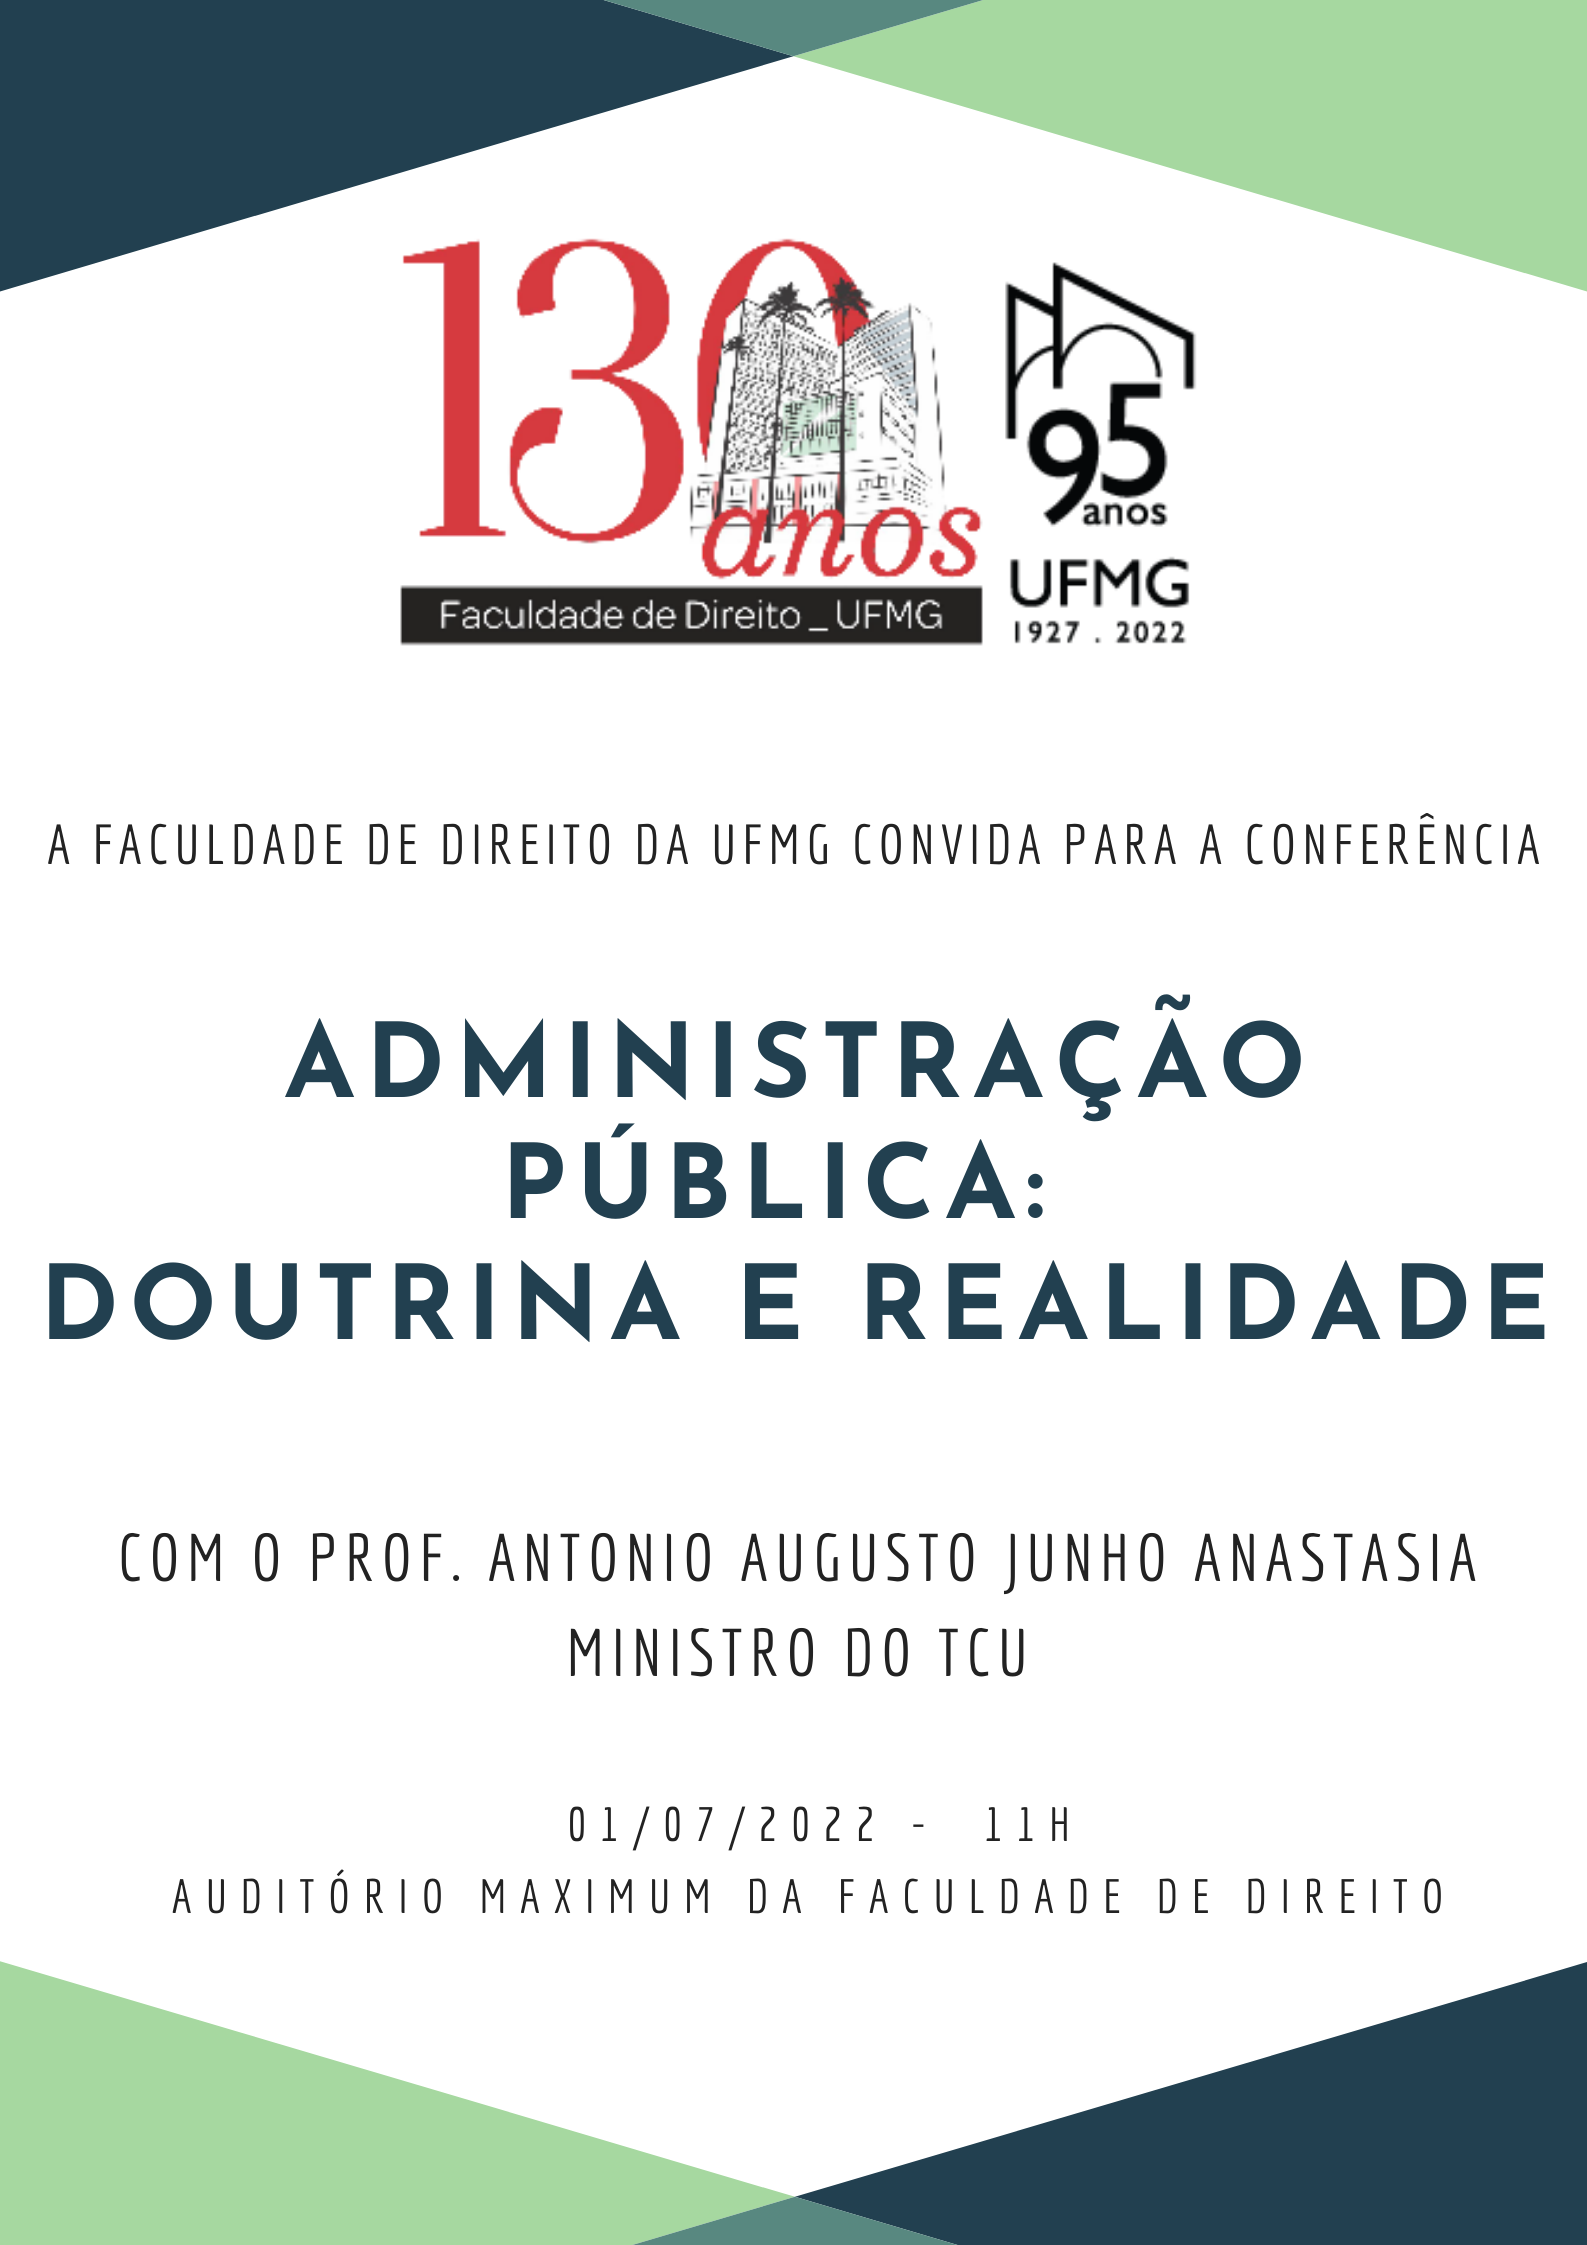 NDE - Direito UFMG